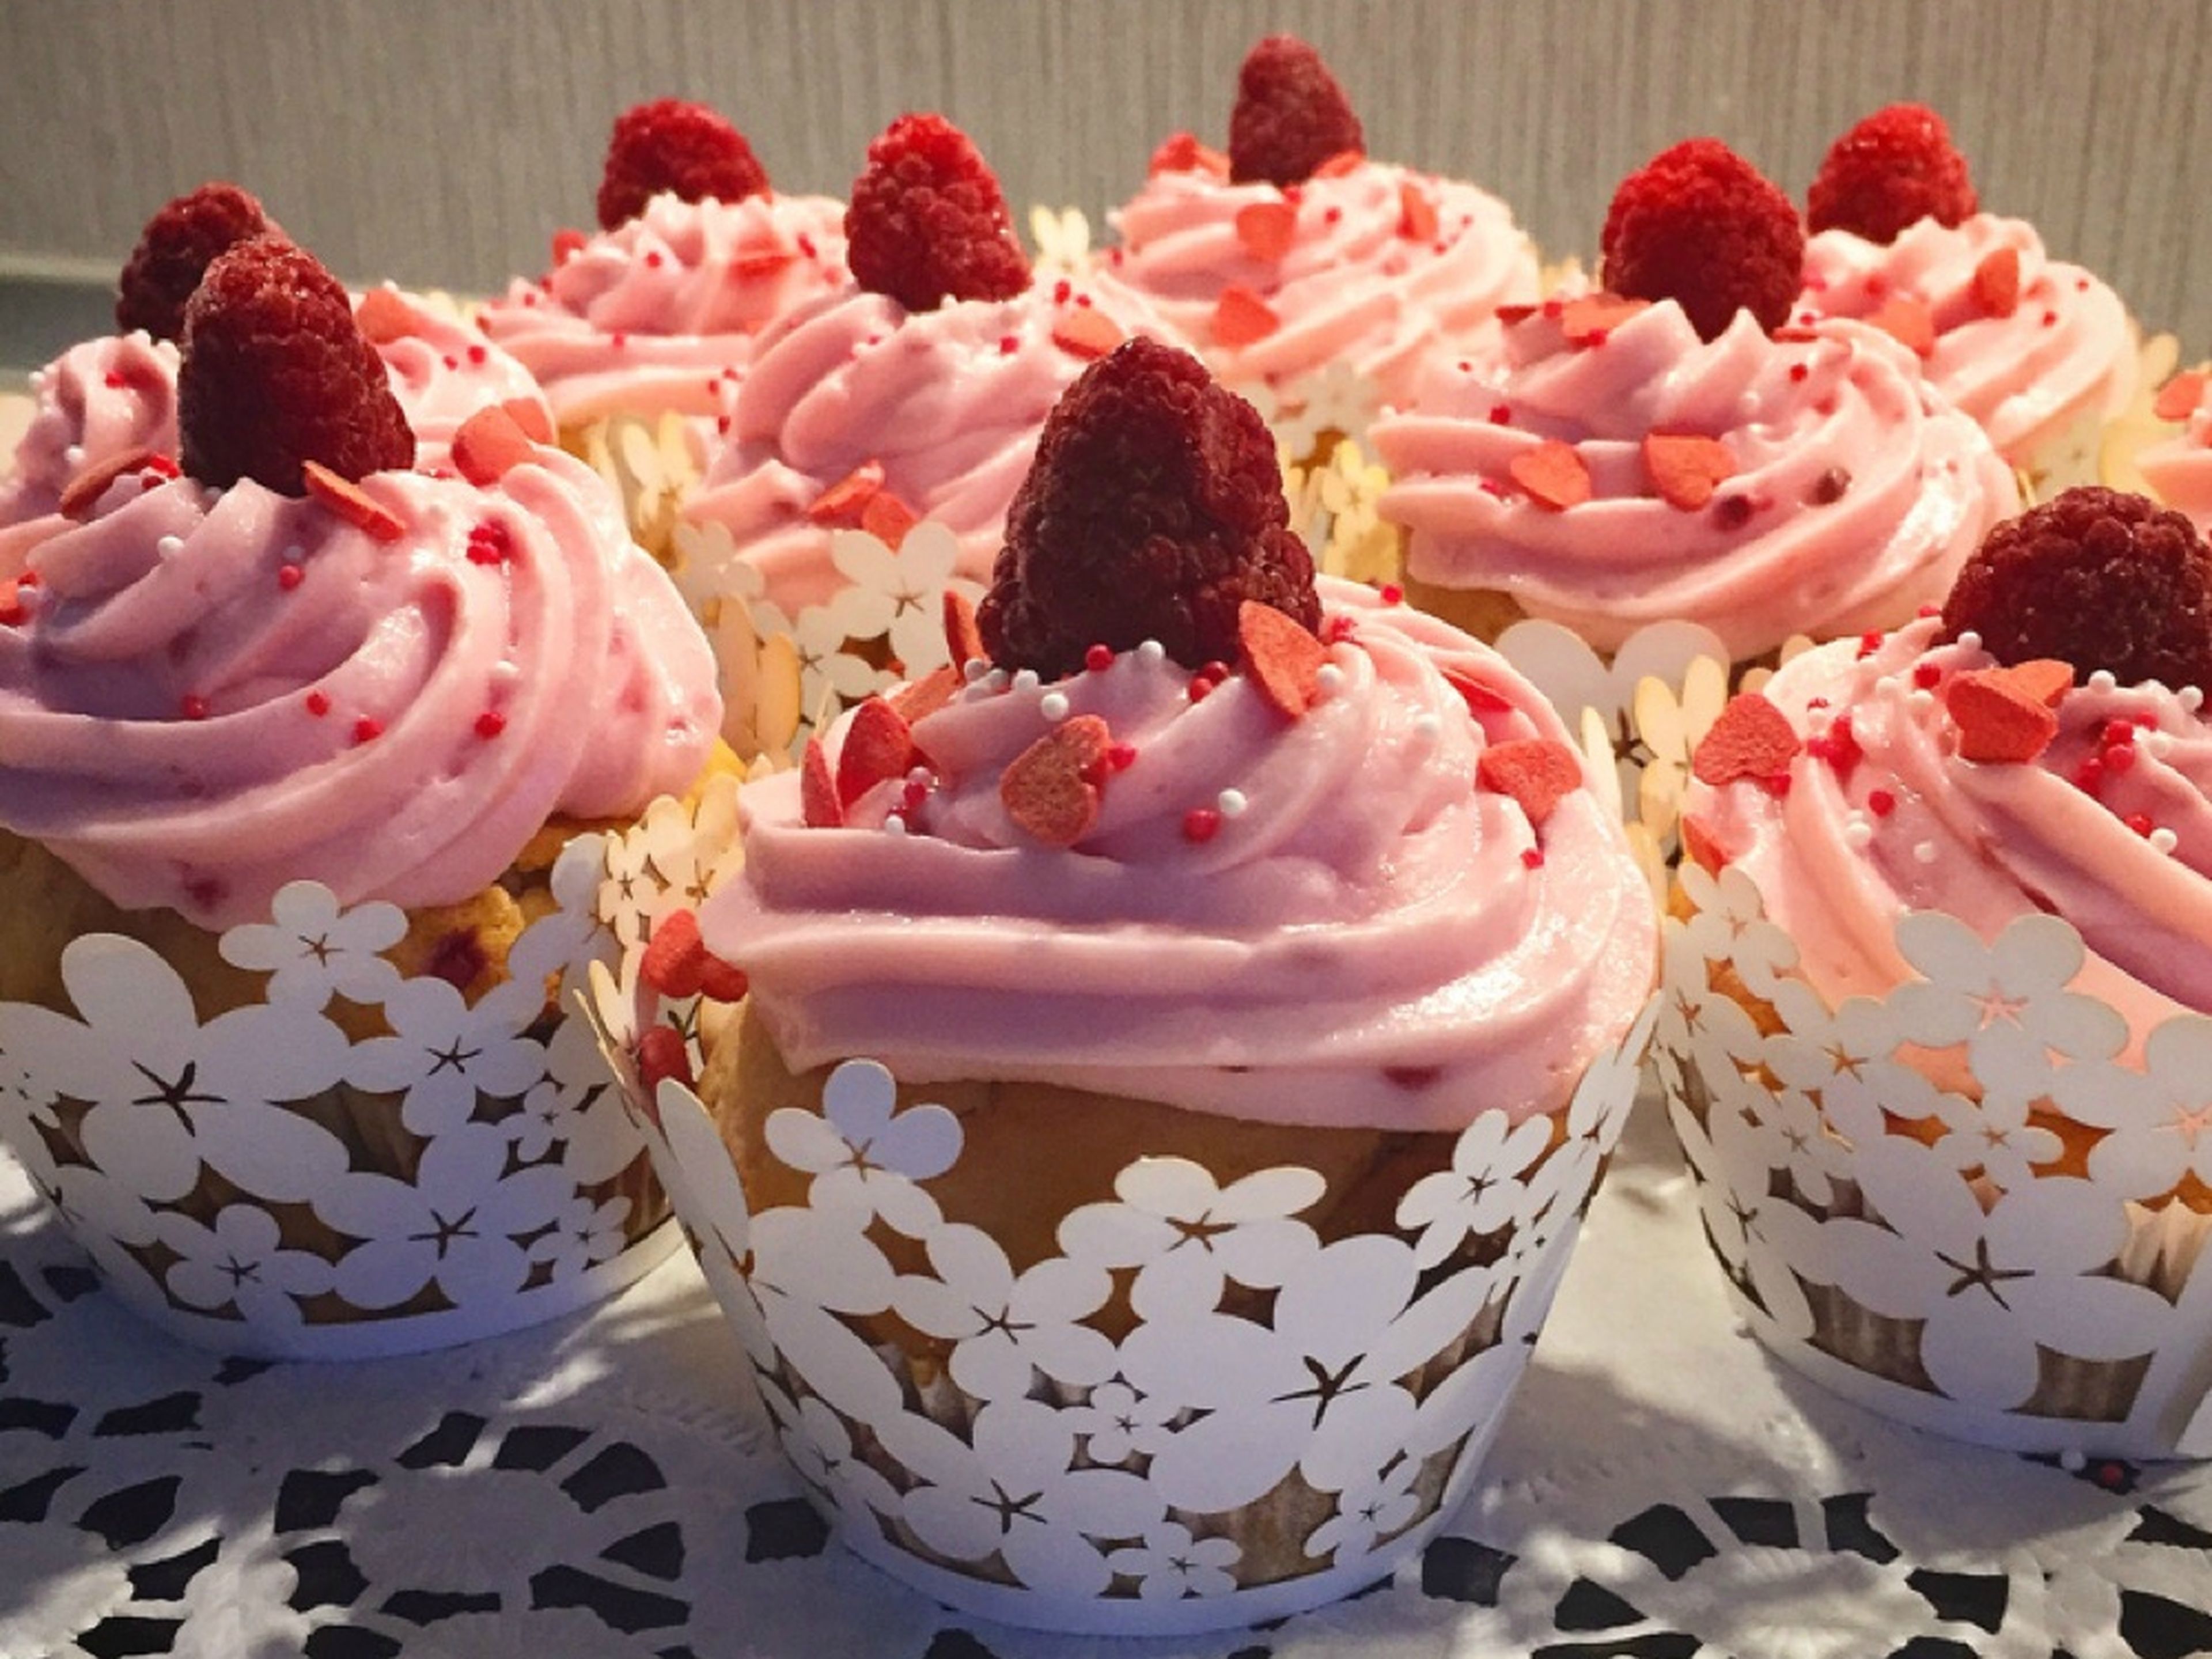 Raspberry and white chocolate cupcakes